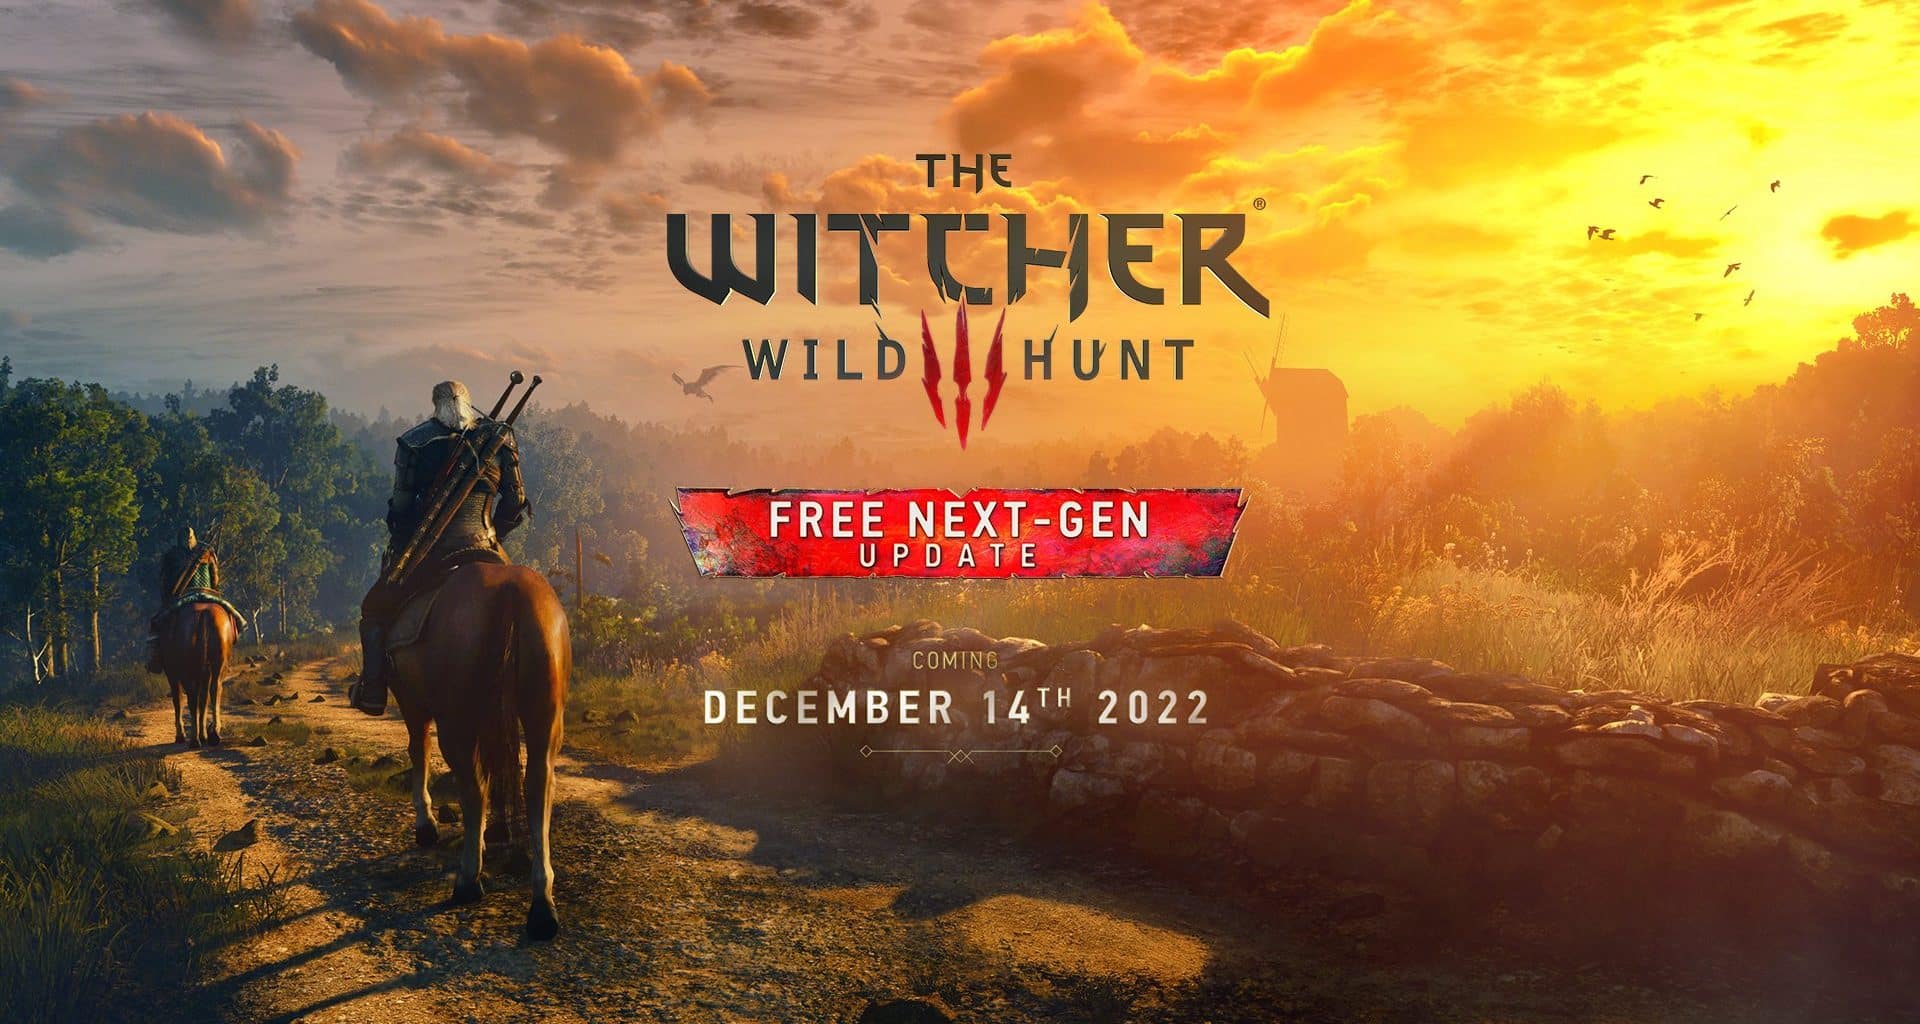 The Witcher 3: Wild Hunt Hits Next-Gen This December